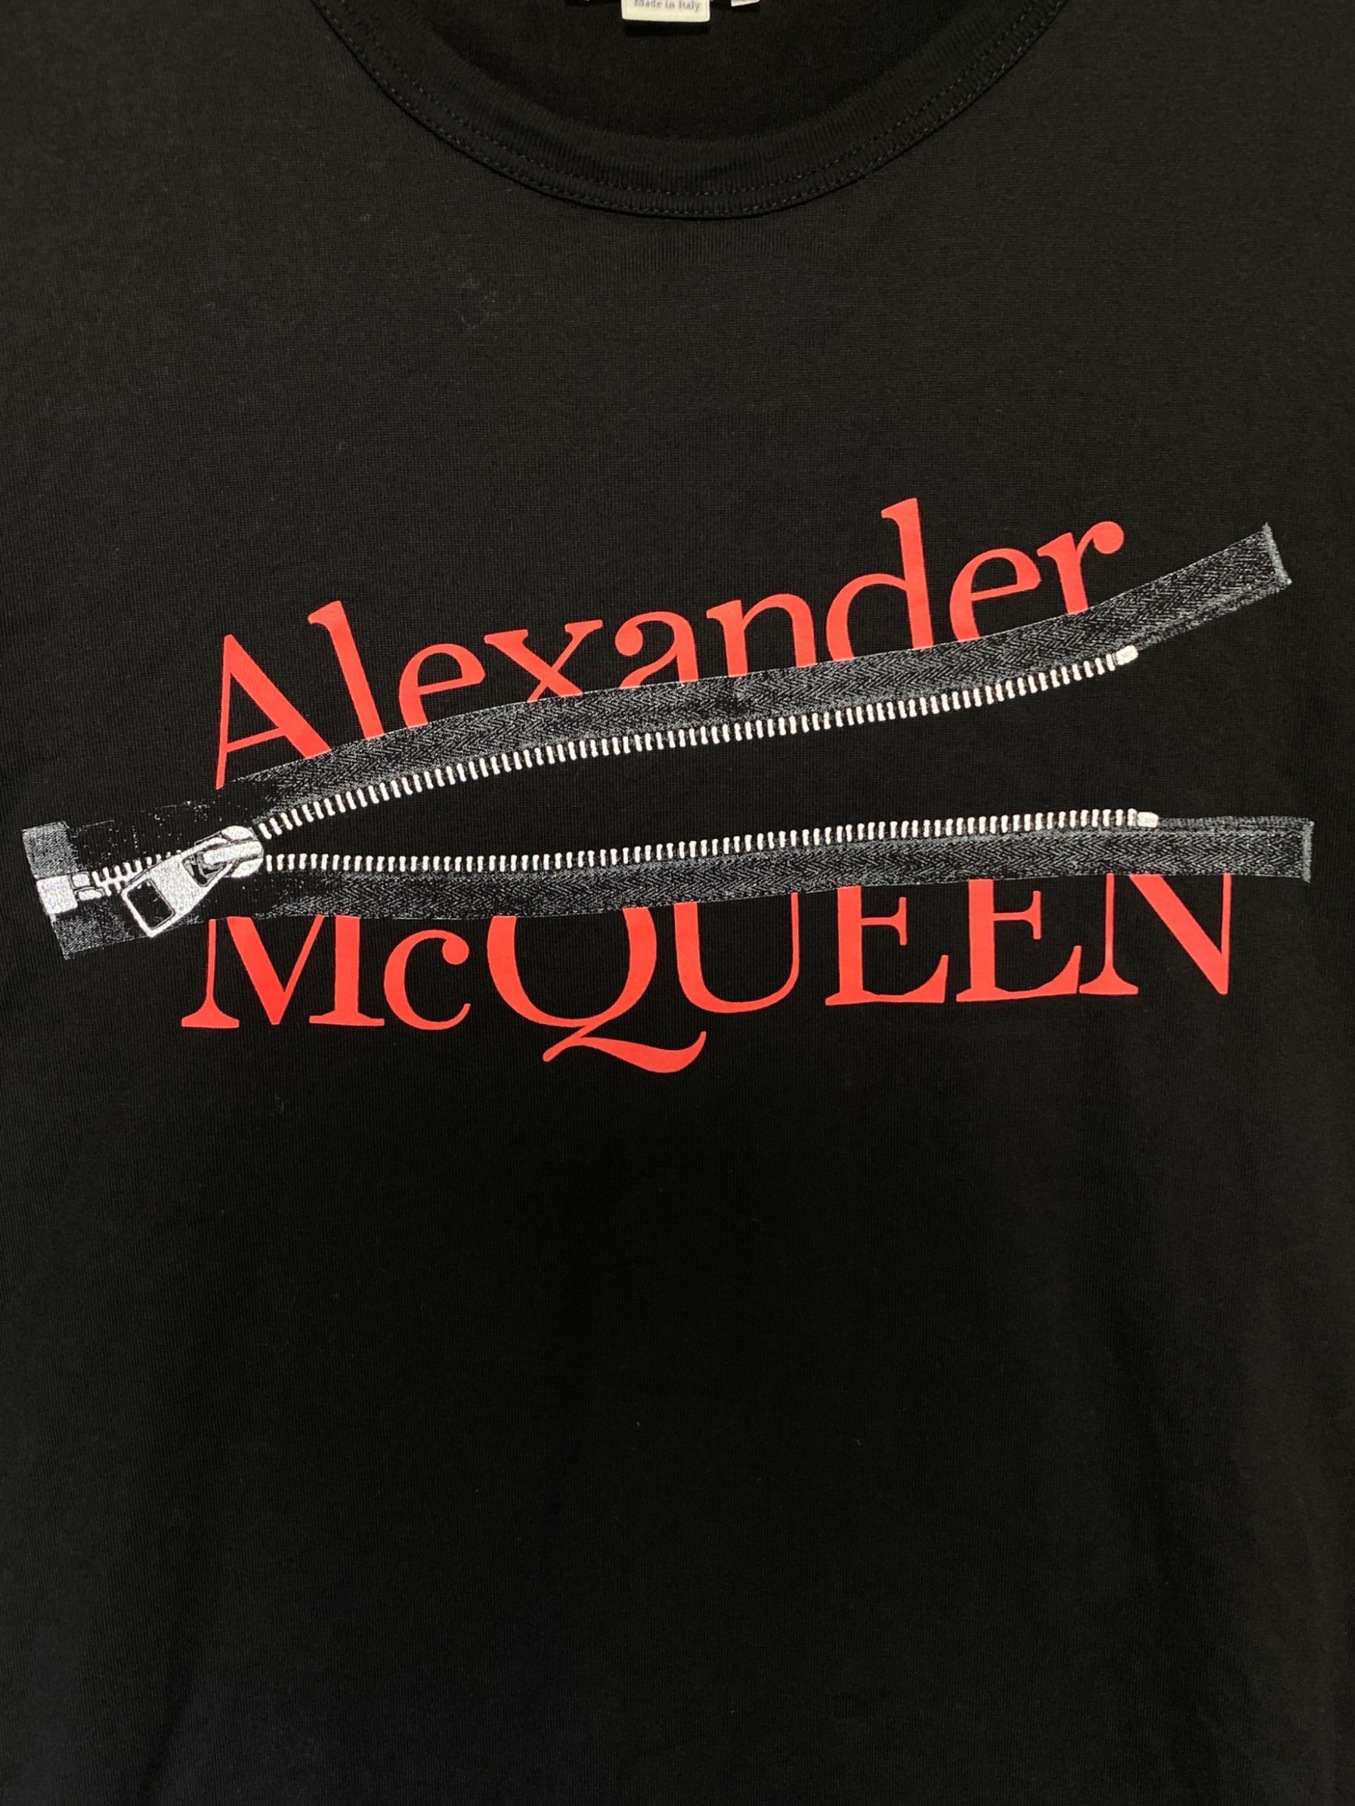 Alexander McQueen アレキサンダーマックイーン 631390 Tシャツ ブラック メンズ